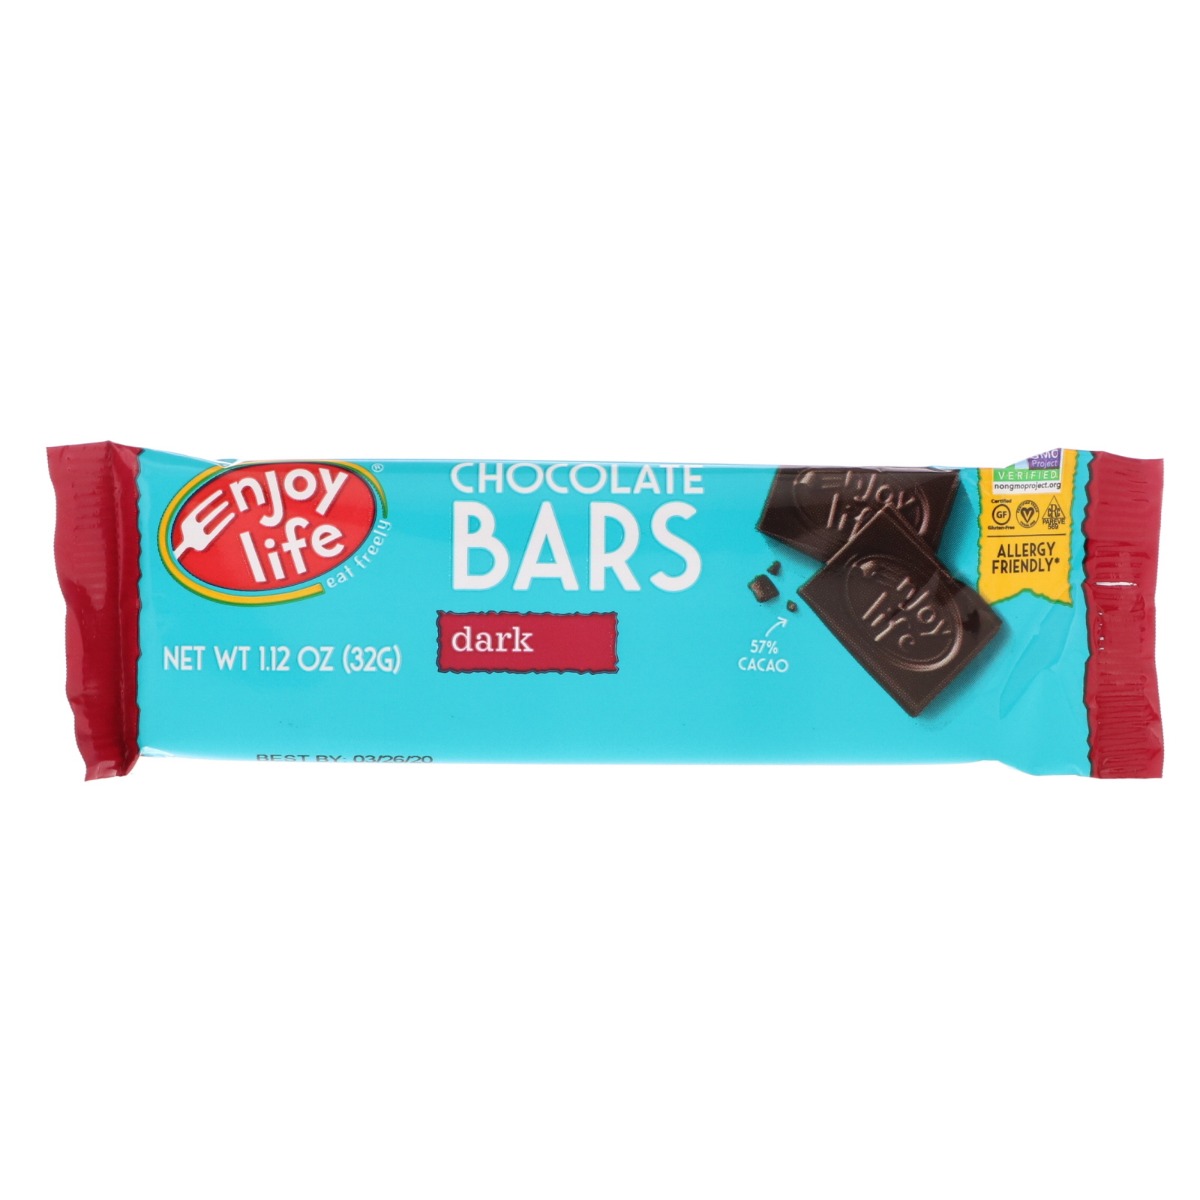 Enjoy Life, Dark Chocolate Bar - 853522000726